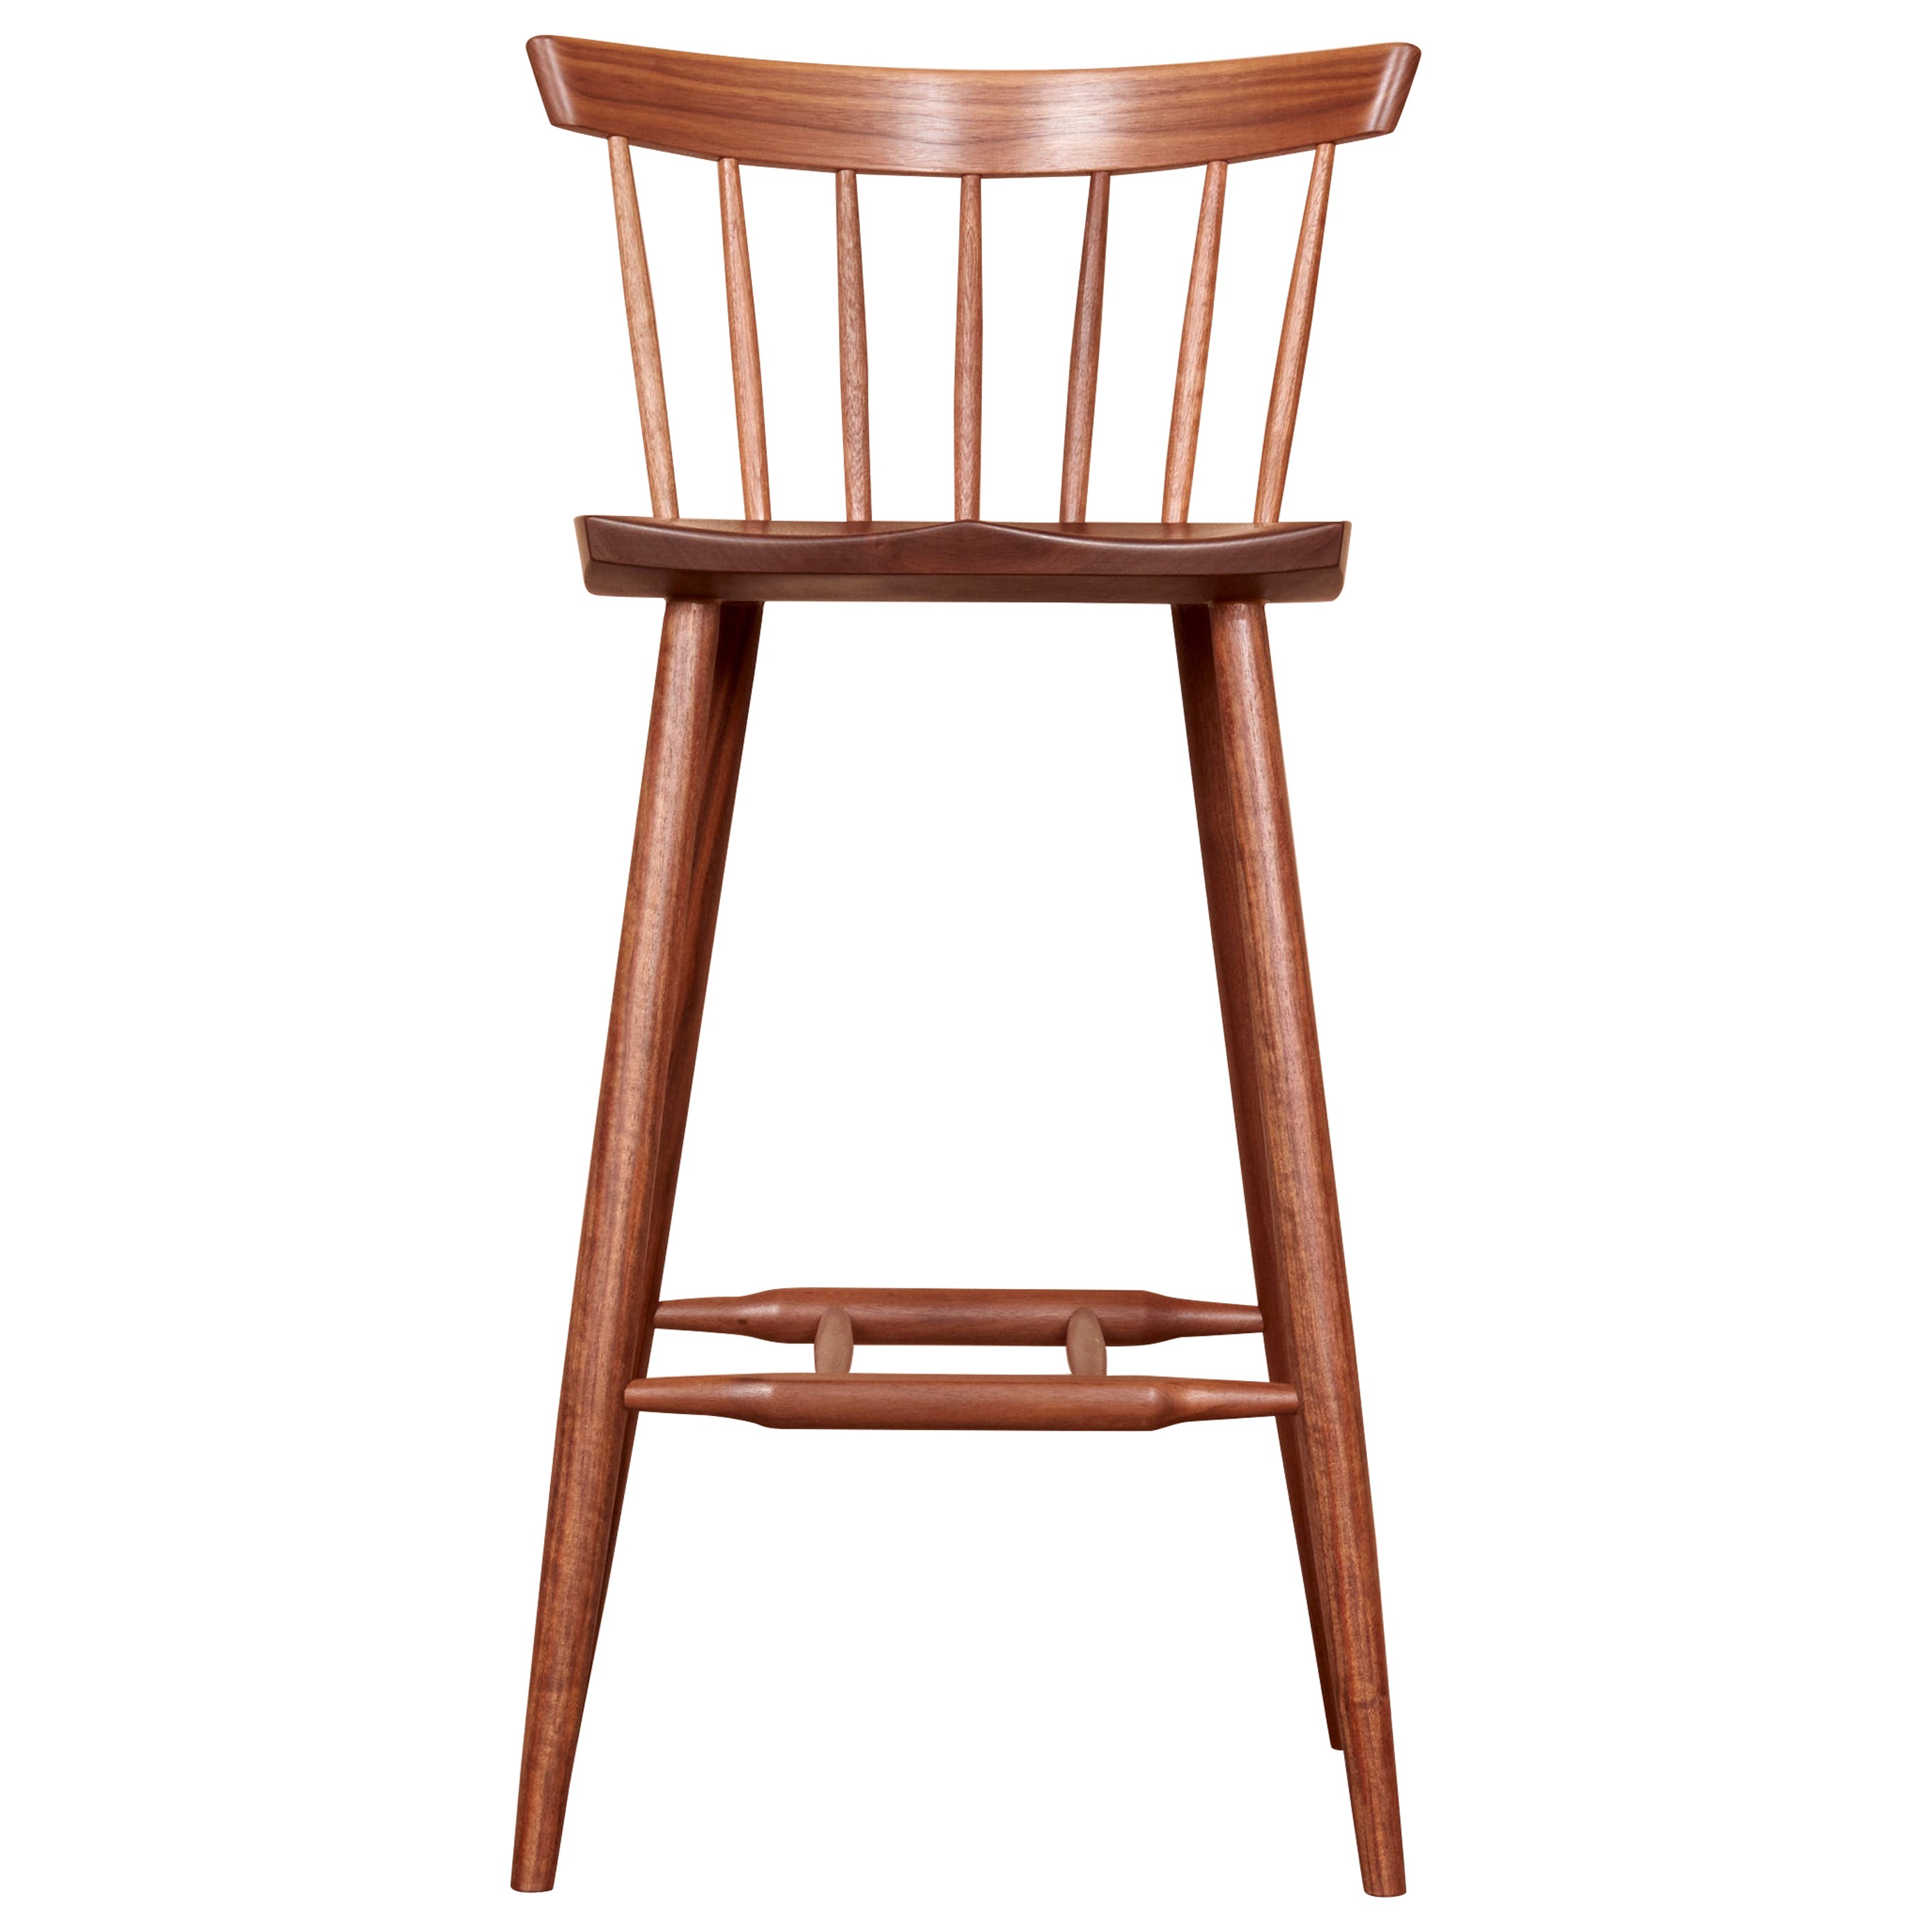 Mira Nakashima 4 legged high chair based on a design by George Nakashima, USA